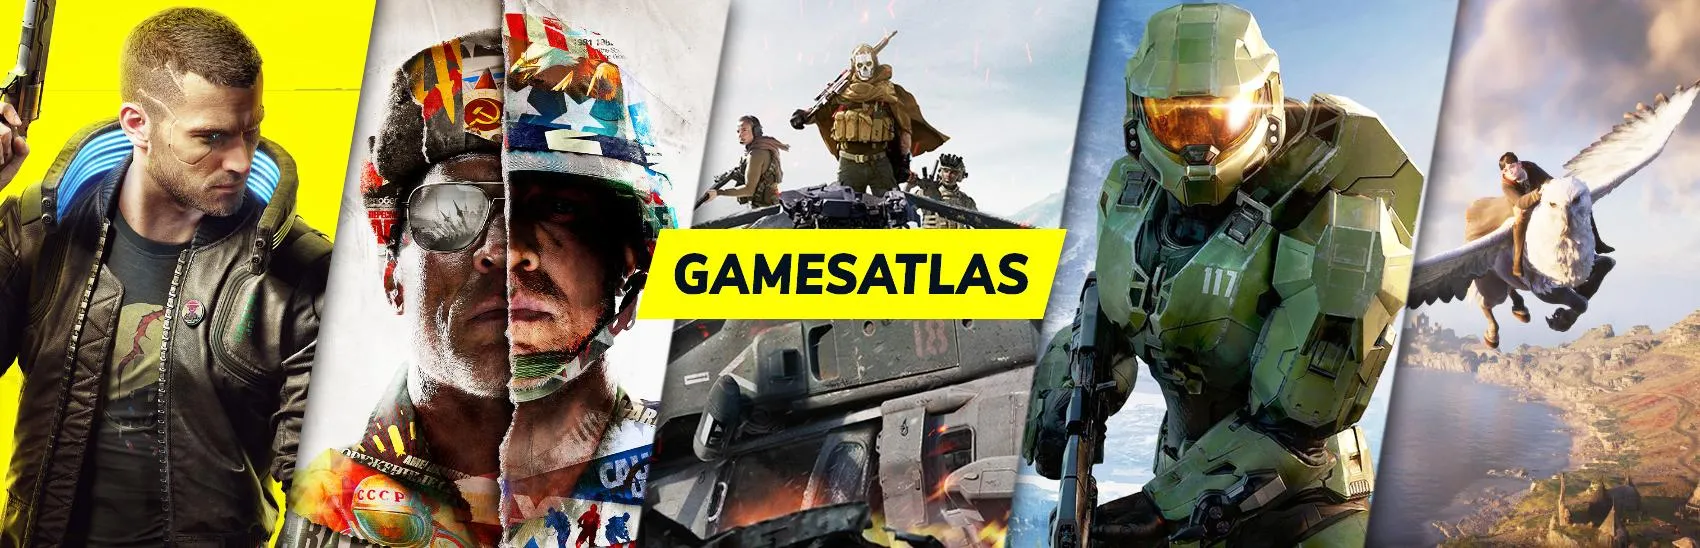 Games Atlas